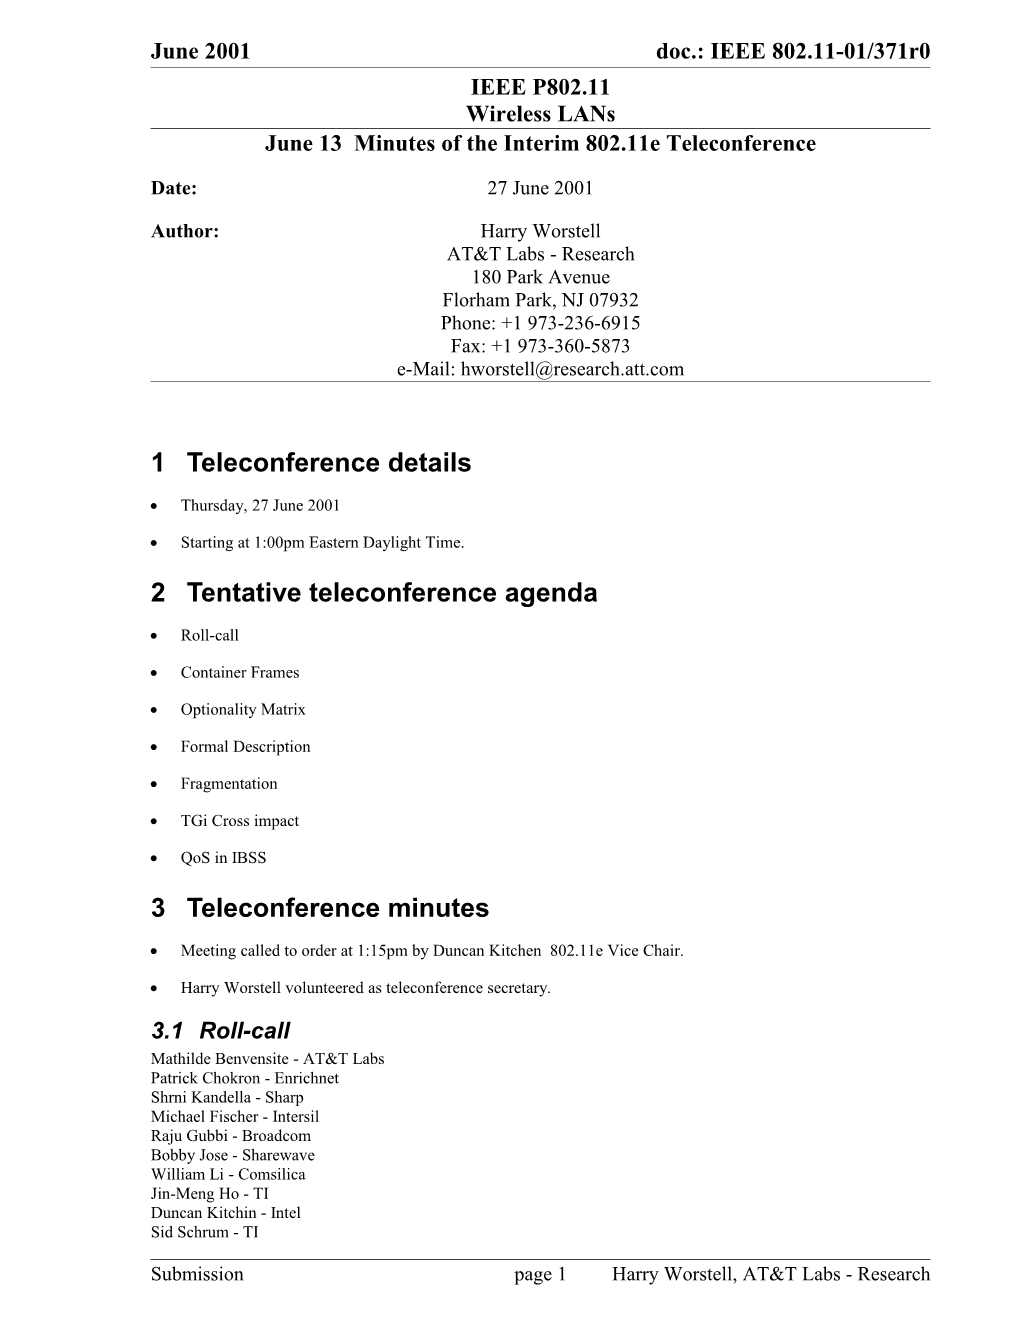 June 13 Minutes of the Interim 802.11E Teleconference